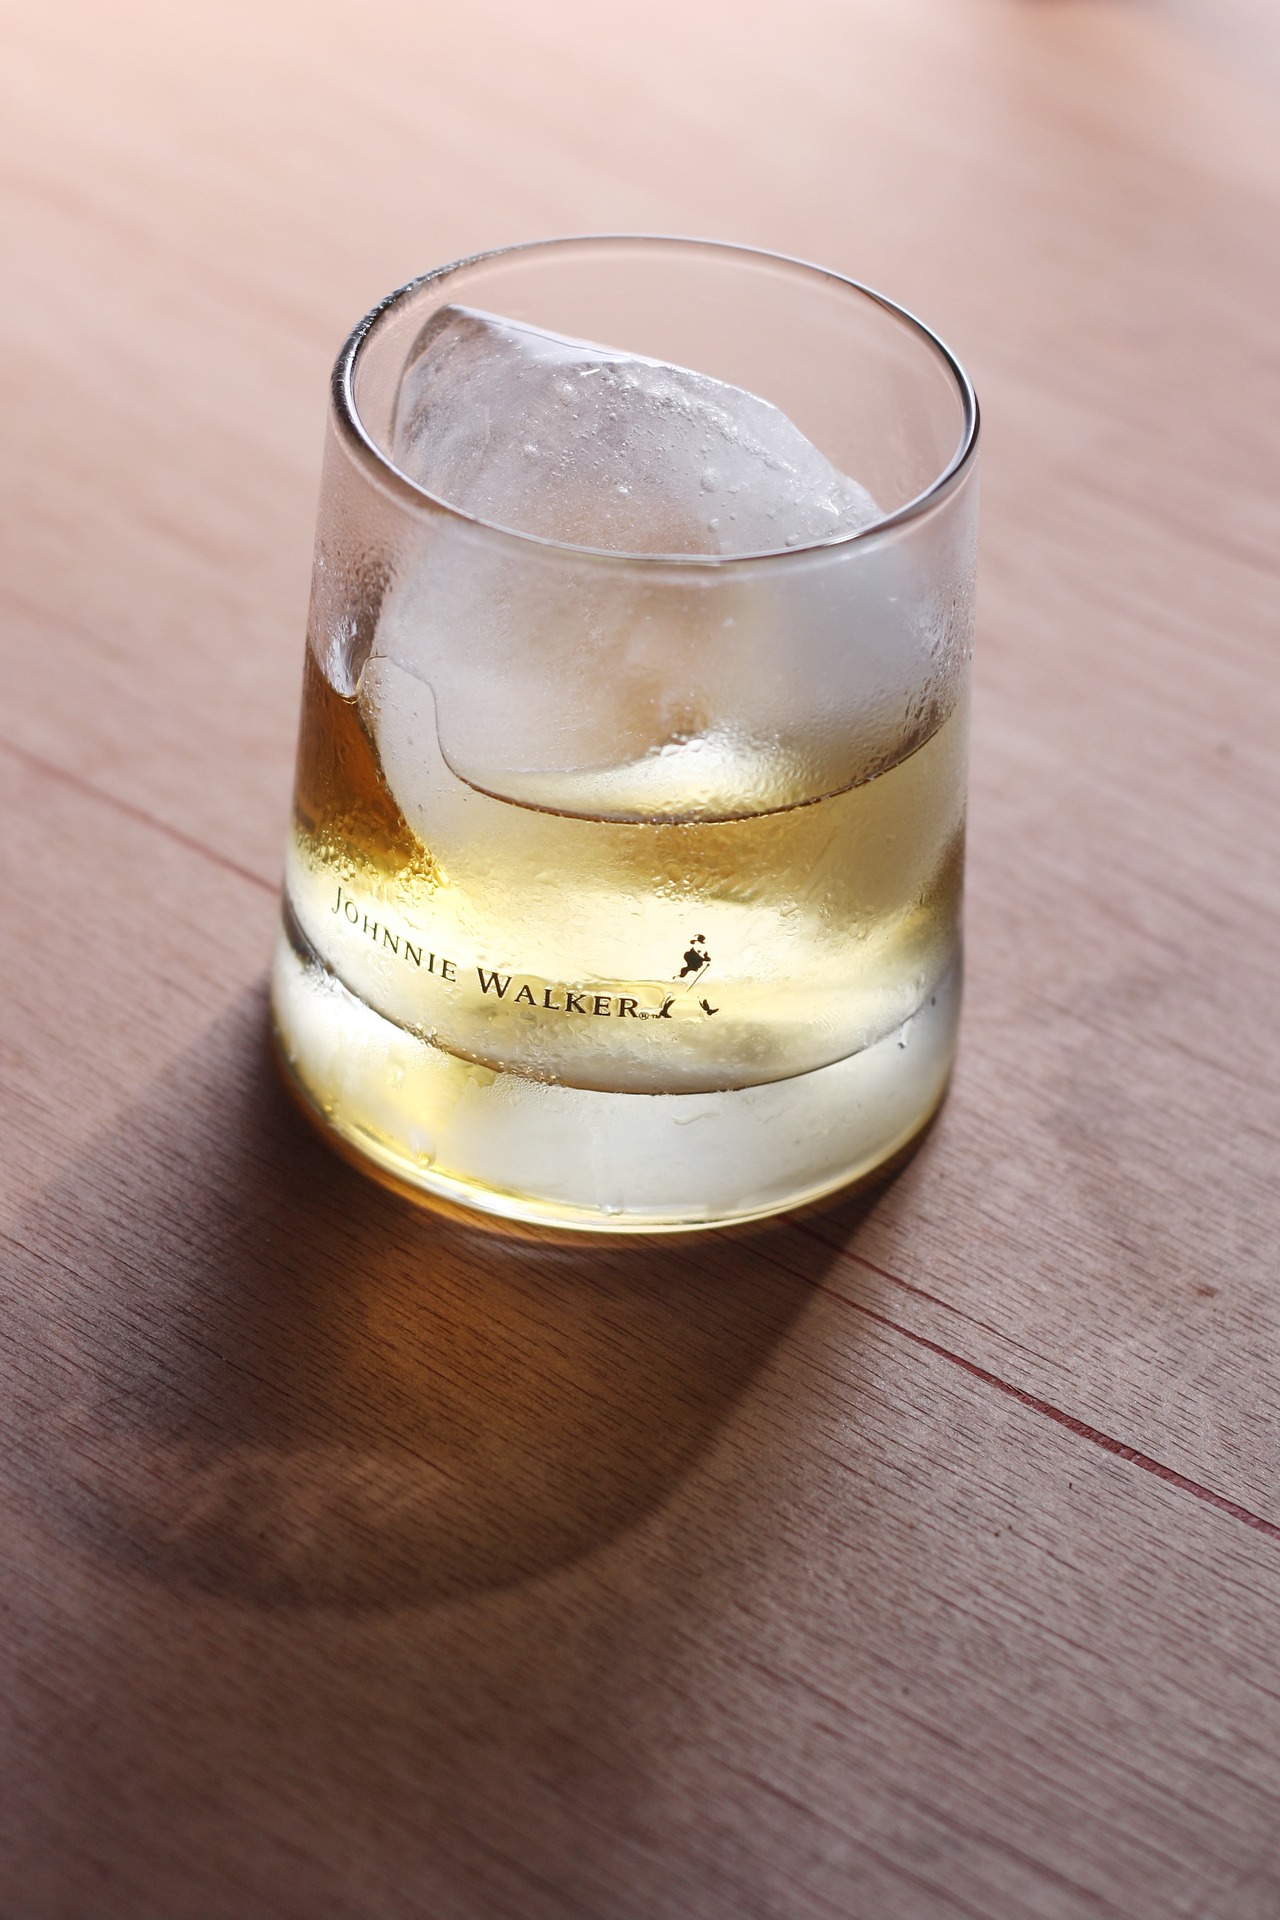 Whisky Johnnie Walker Blue Label 200th Anniversary Whisky Scozzese Blended